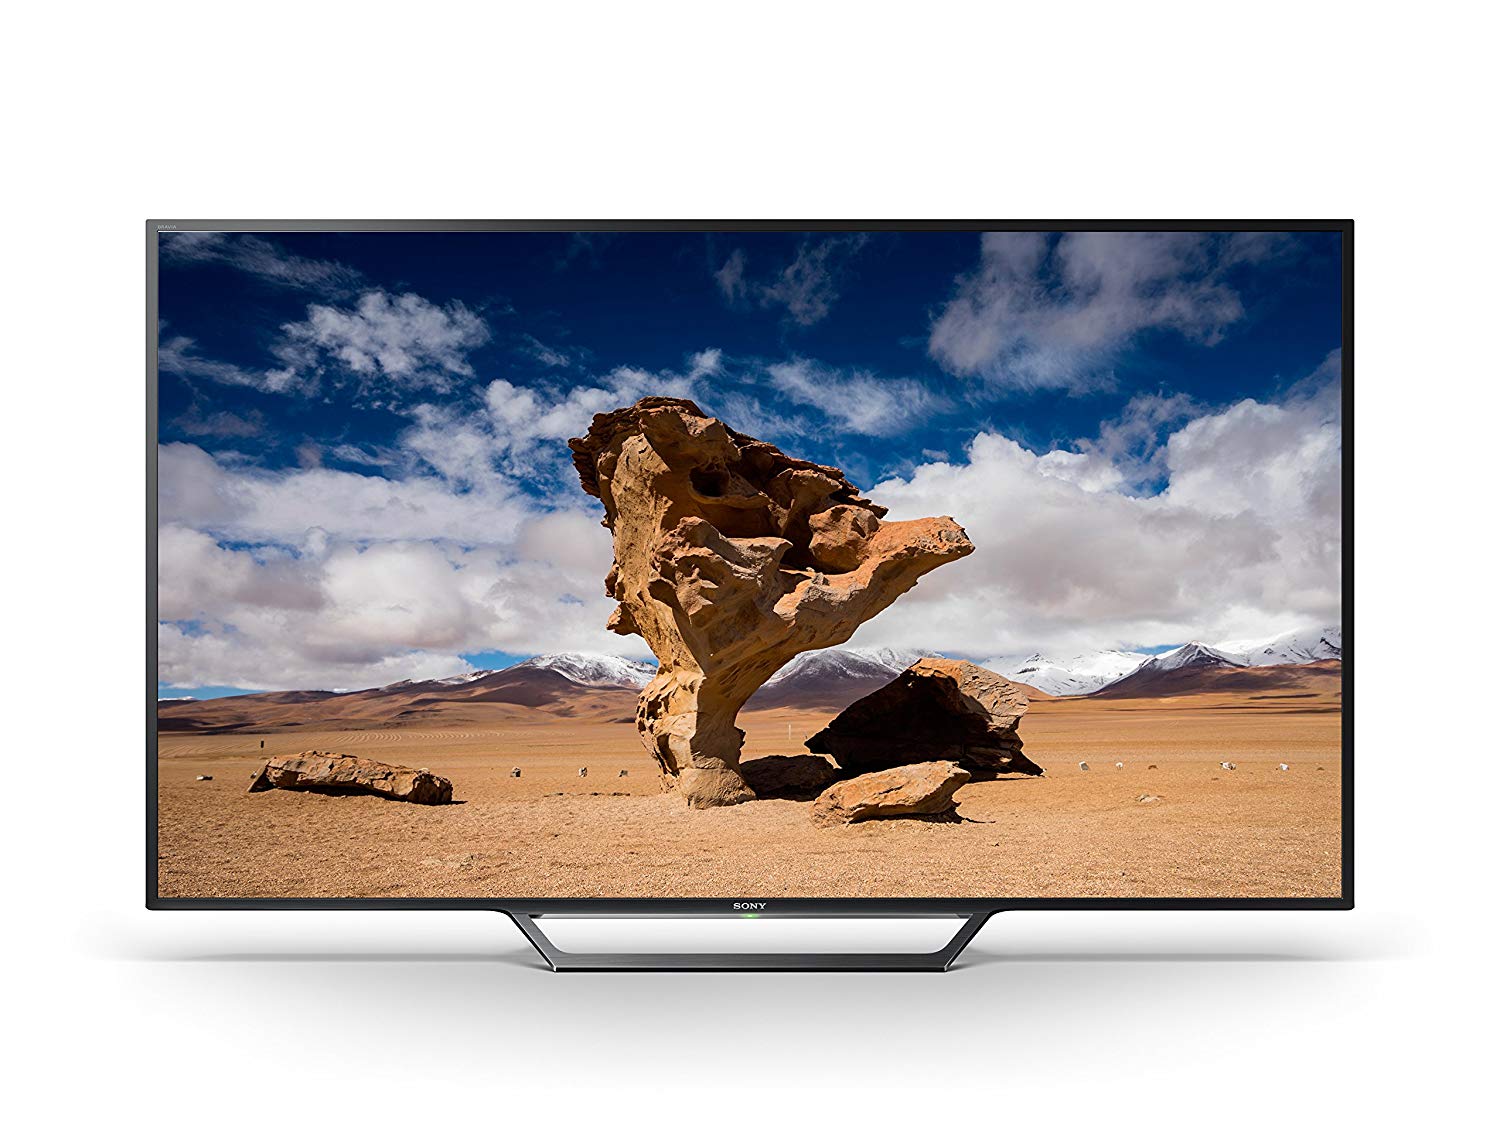 Sony KDL40W650D 40-Zoll-1080p-Smart-LED-Fernseher (Modell 2016)